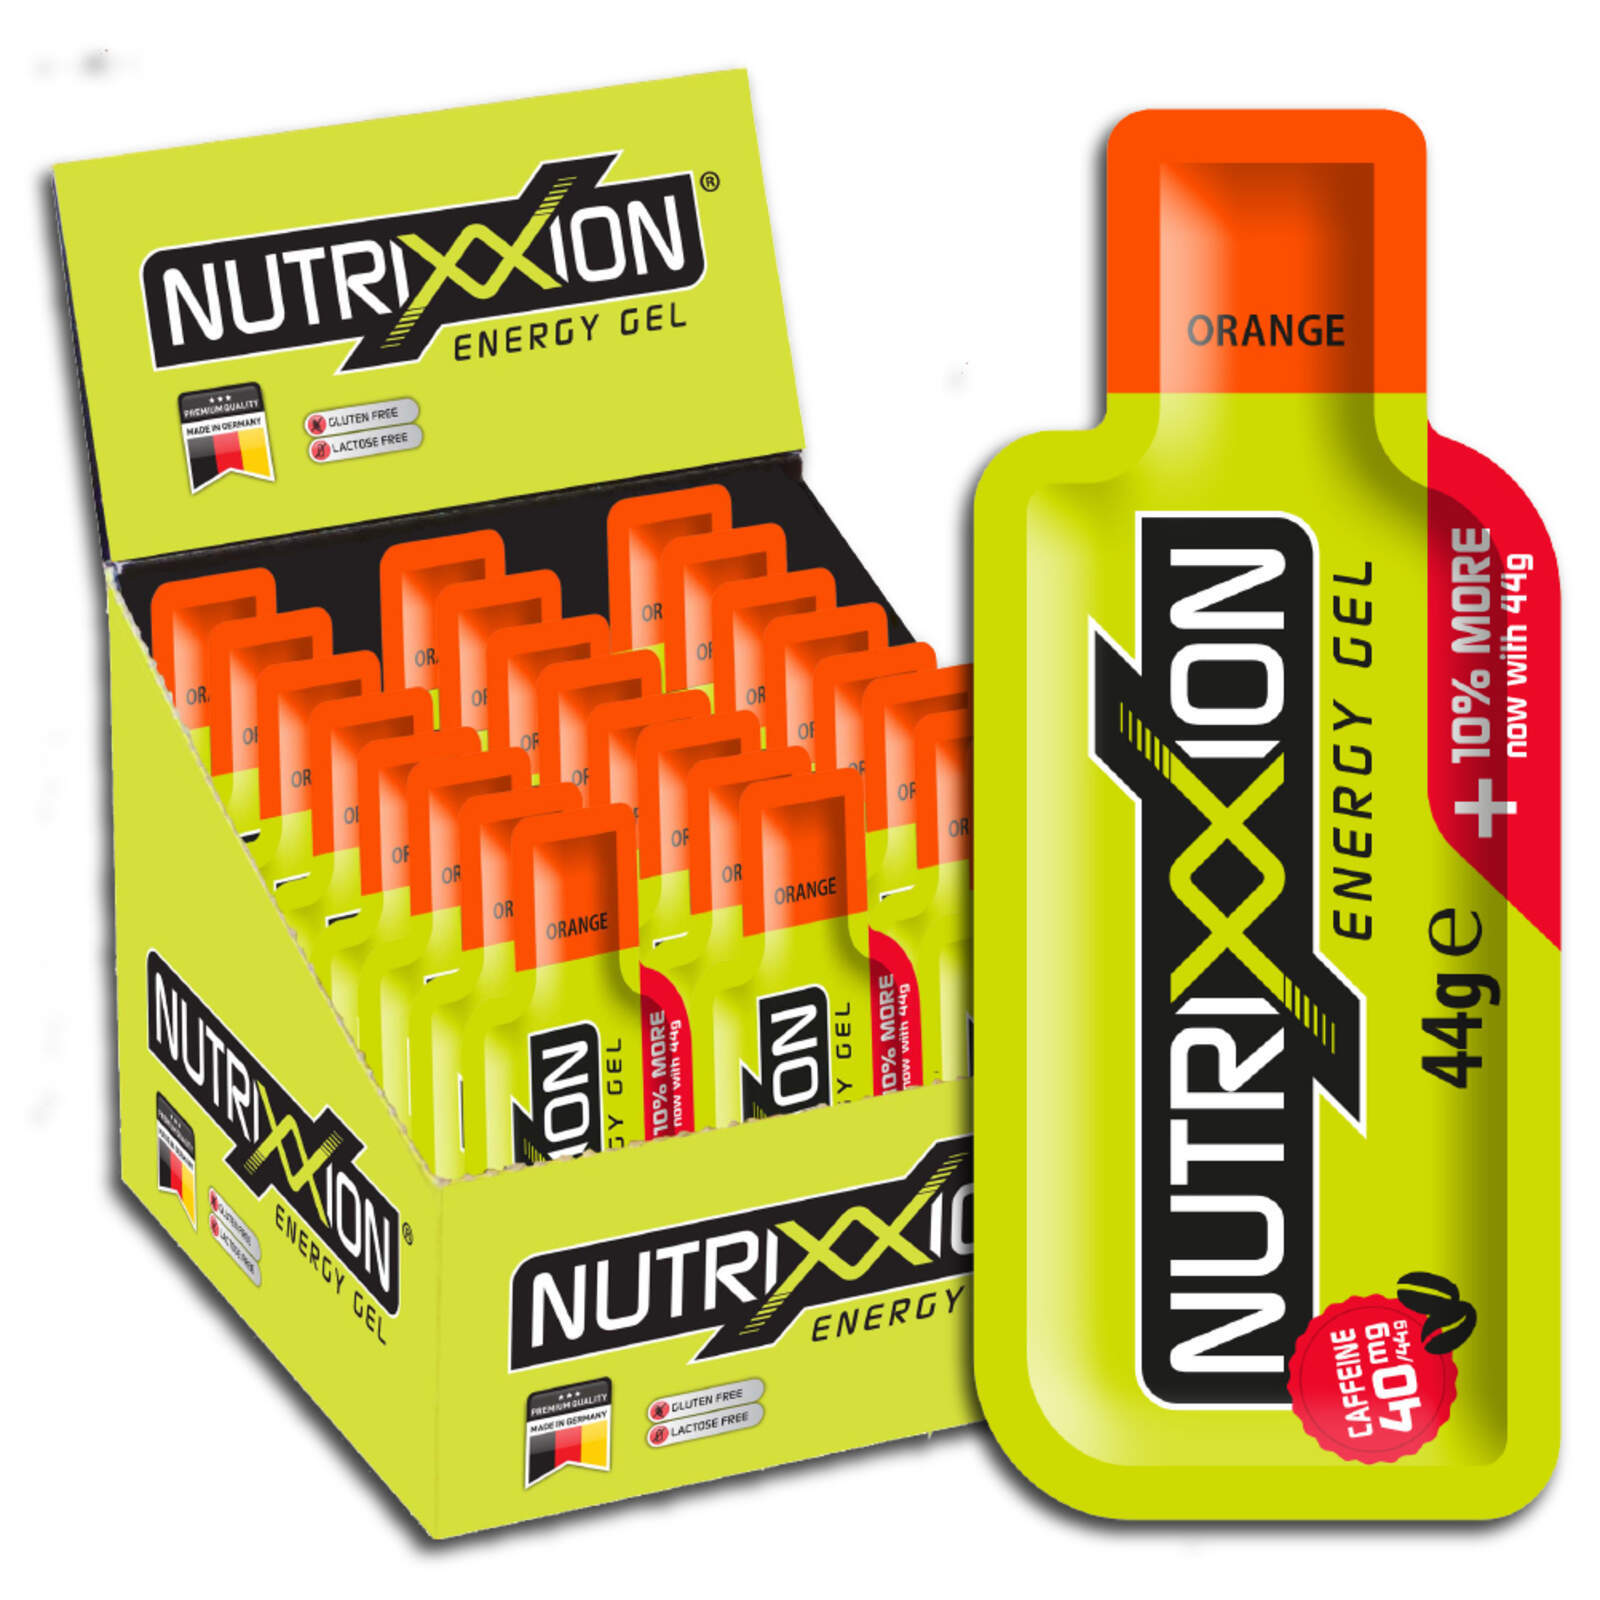 NUTRIXXION Énergie Gel 24 x 44g
Orange [40mg caféine]